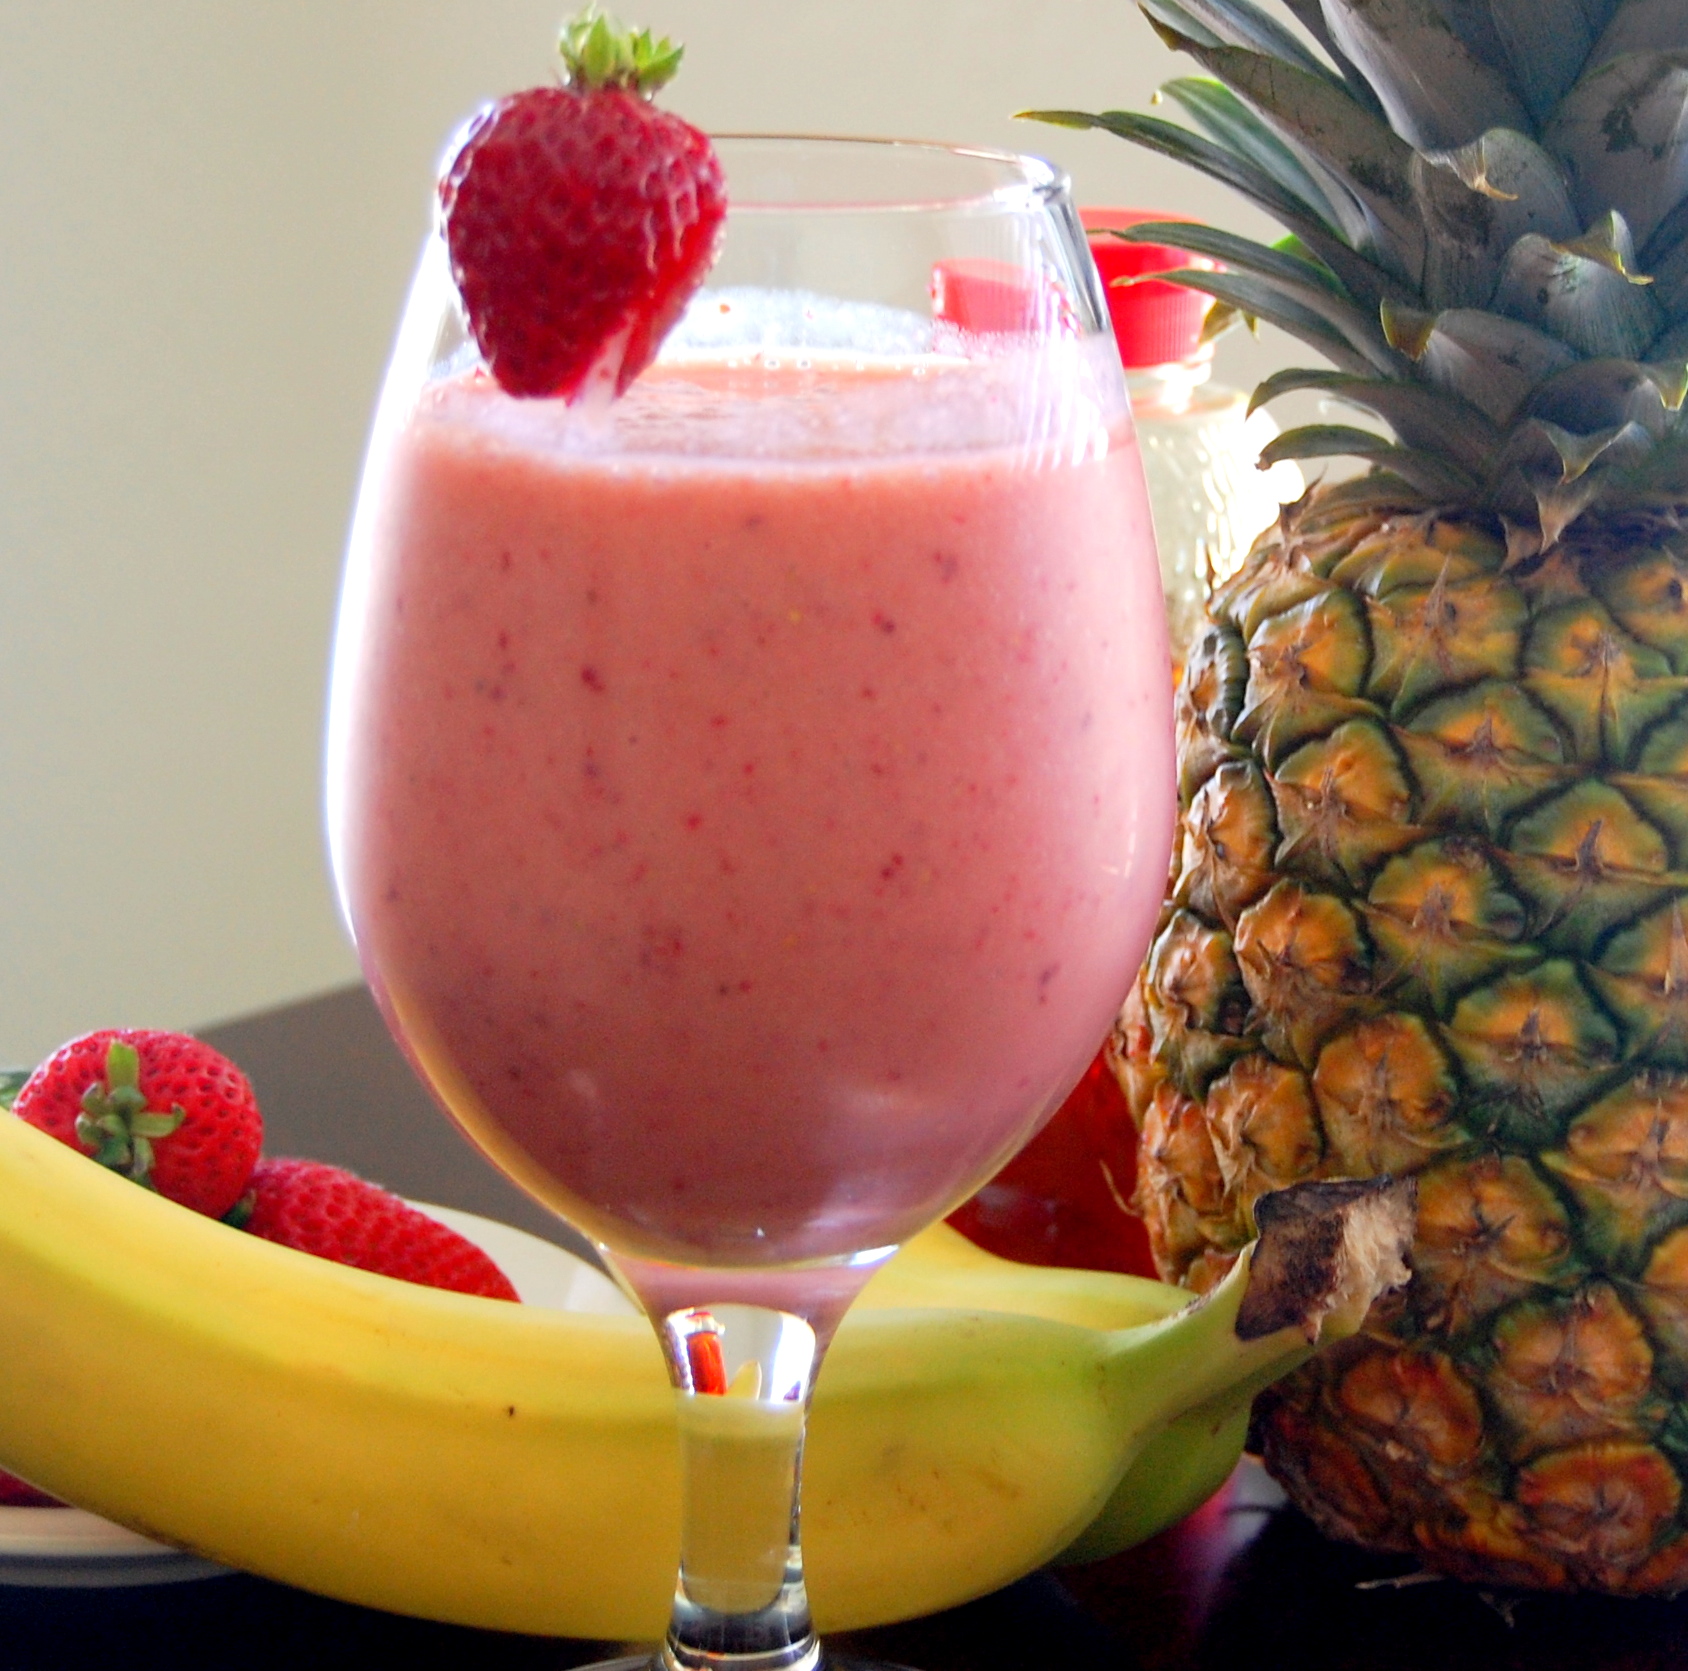 strawberry-banana-pineapple-smoothie.jpg